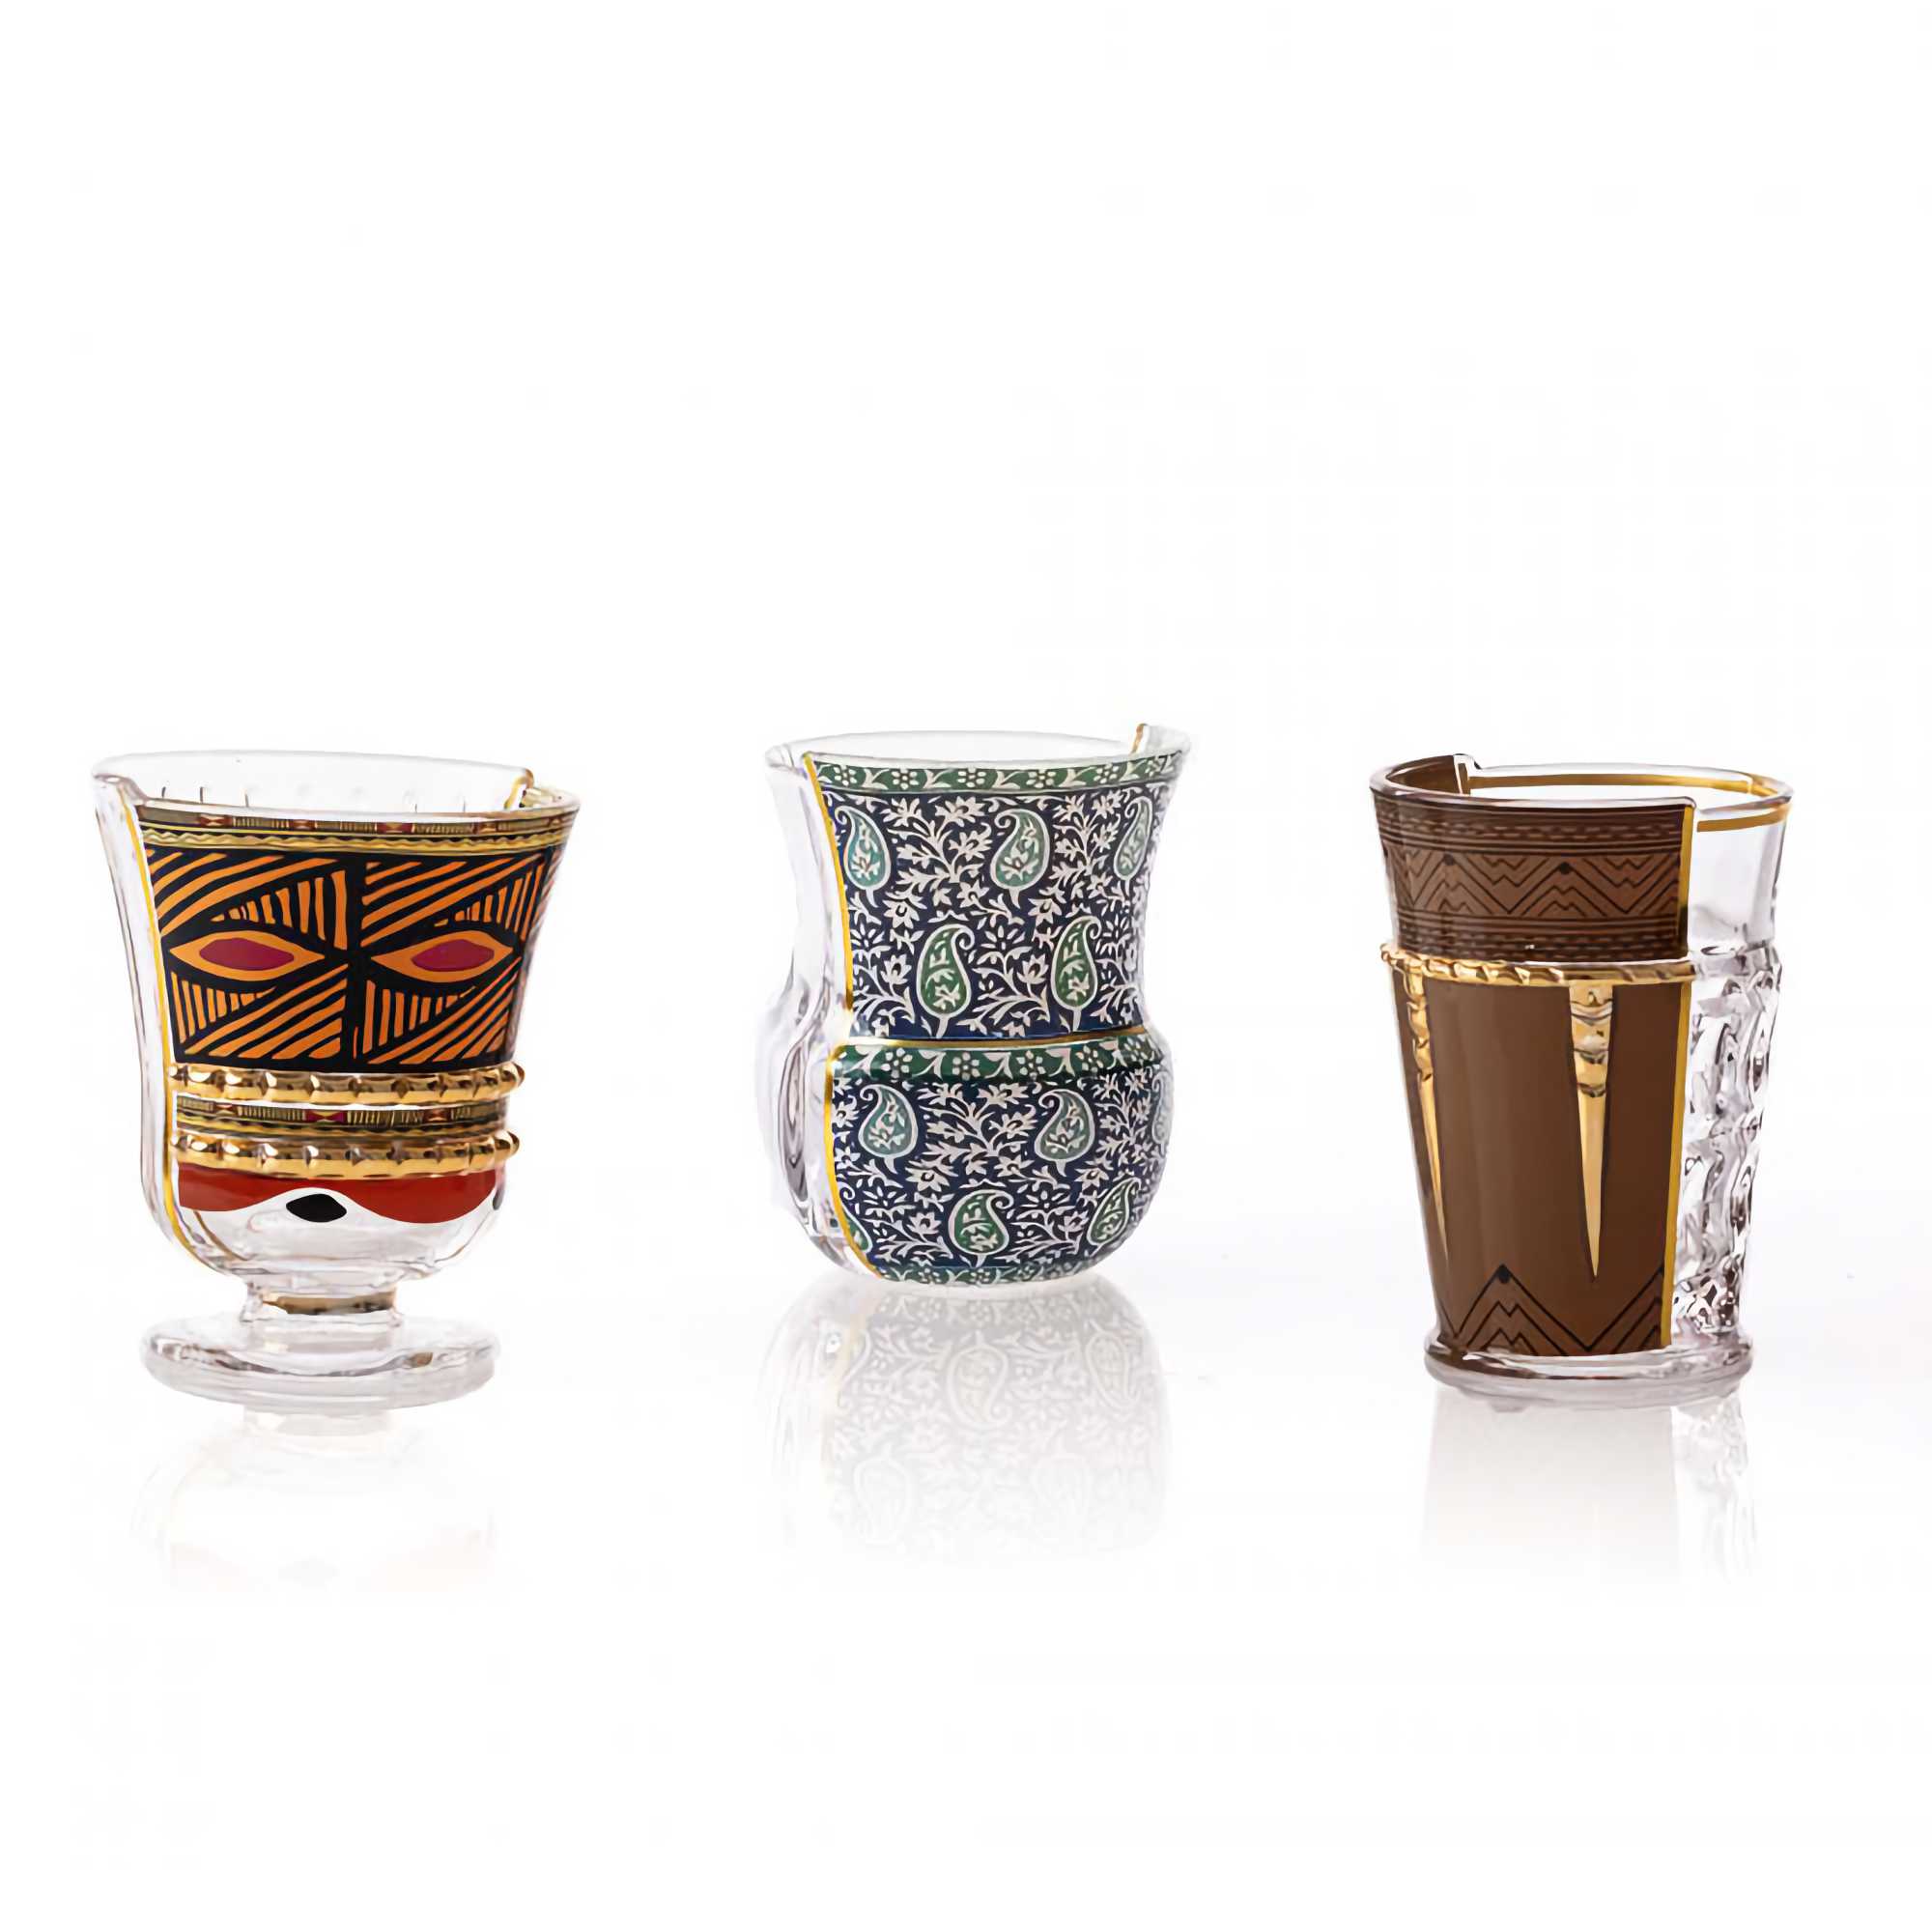  Seletti Kintsugi Mug Cup in Porcelain and 24 Carat Gold mod. 3  : Home & Kitchen